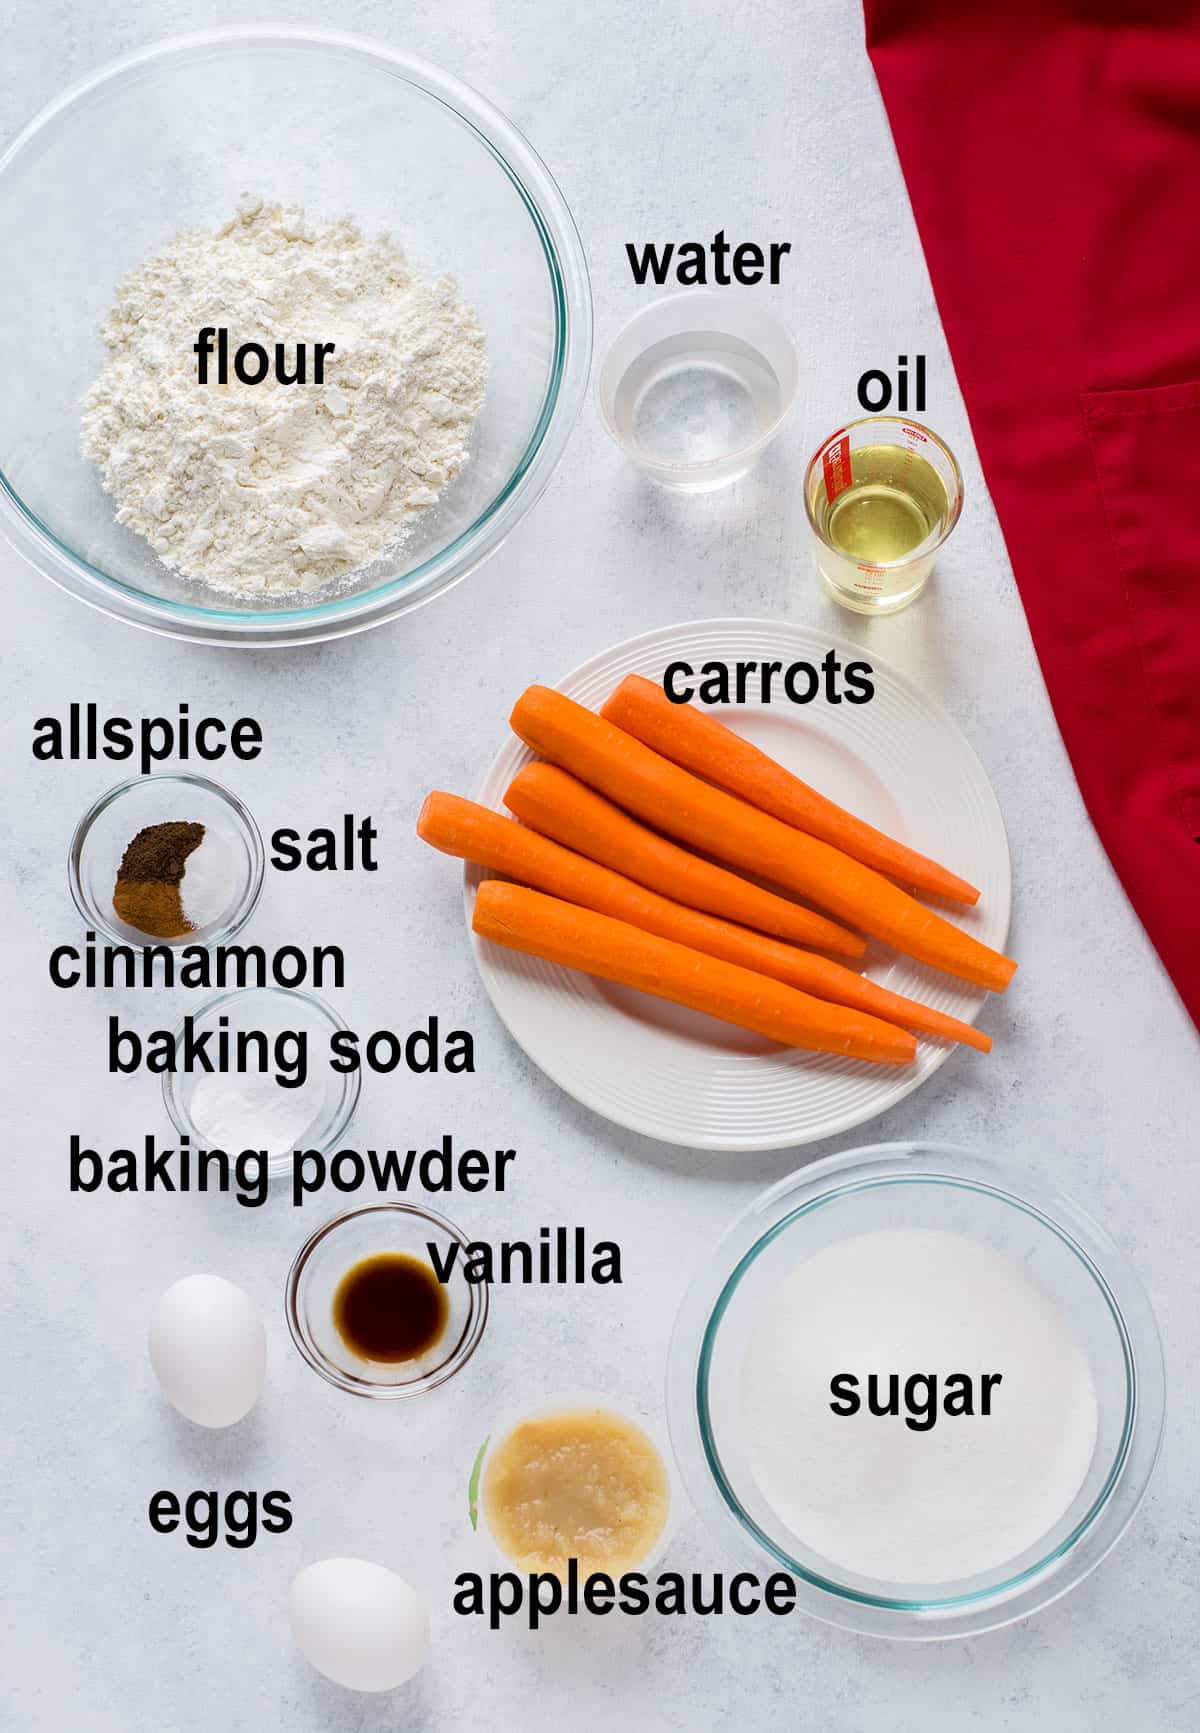 carrots, flour, sugar, oil, applesauce, water, spices, vanilla, baking powder, baking soda